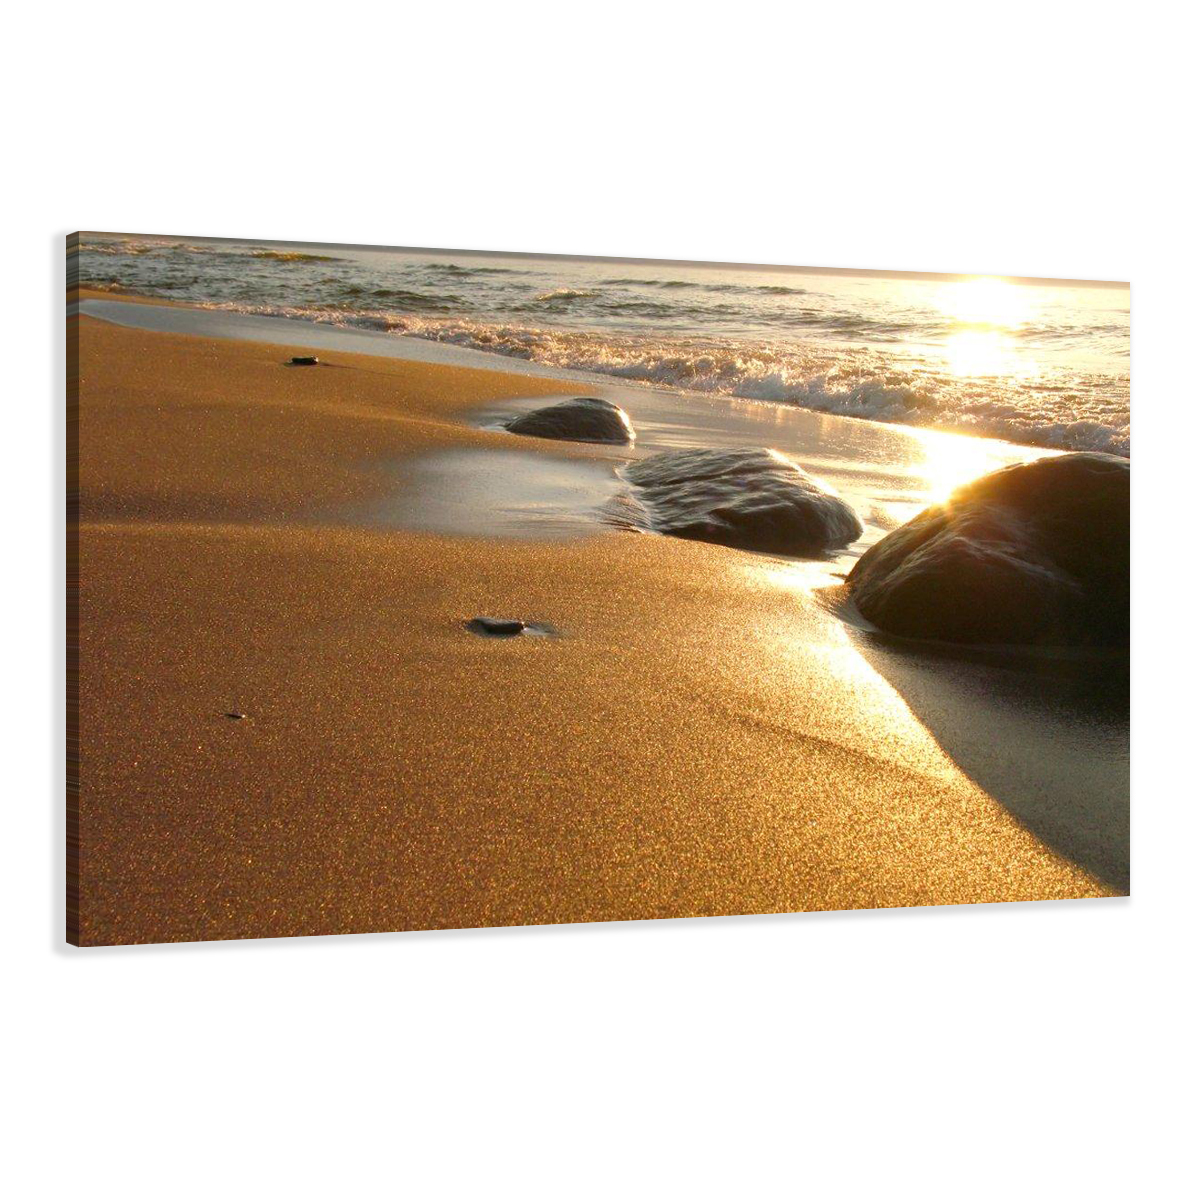 Am Strand Bild Panorama Leinwand Poster Strand Meer Wandbilder 150 cm* 50 cm 730